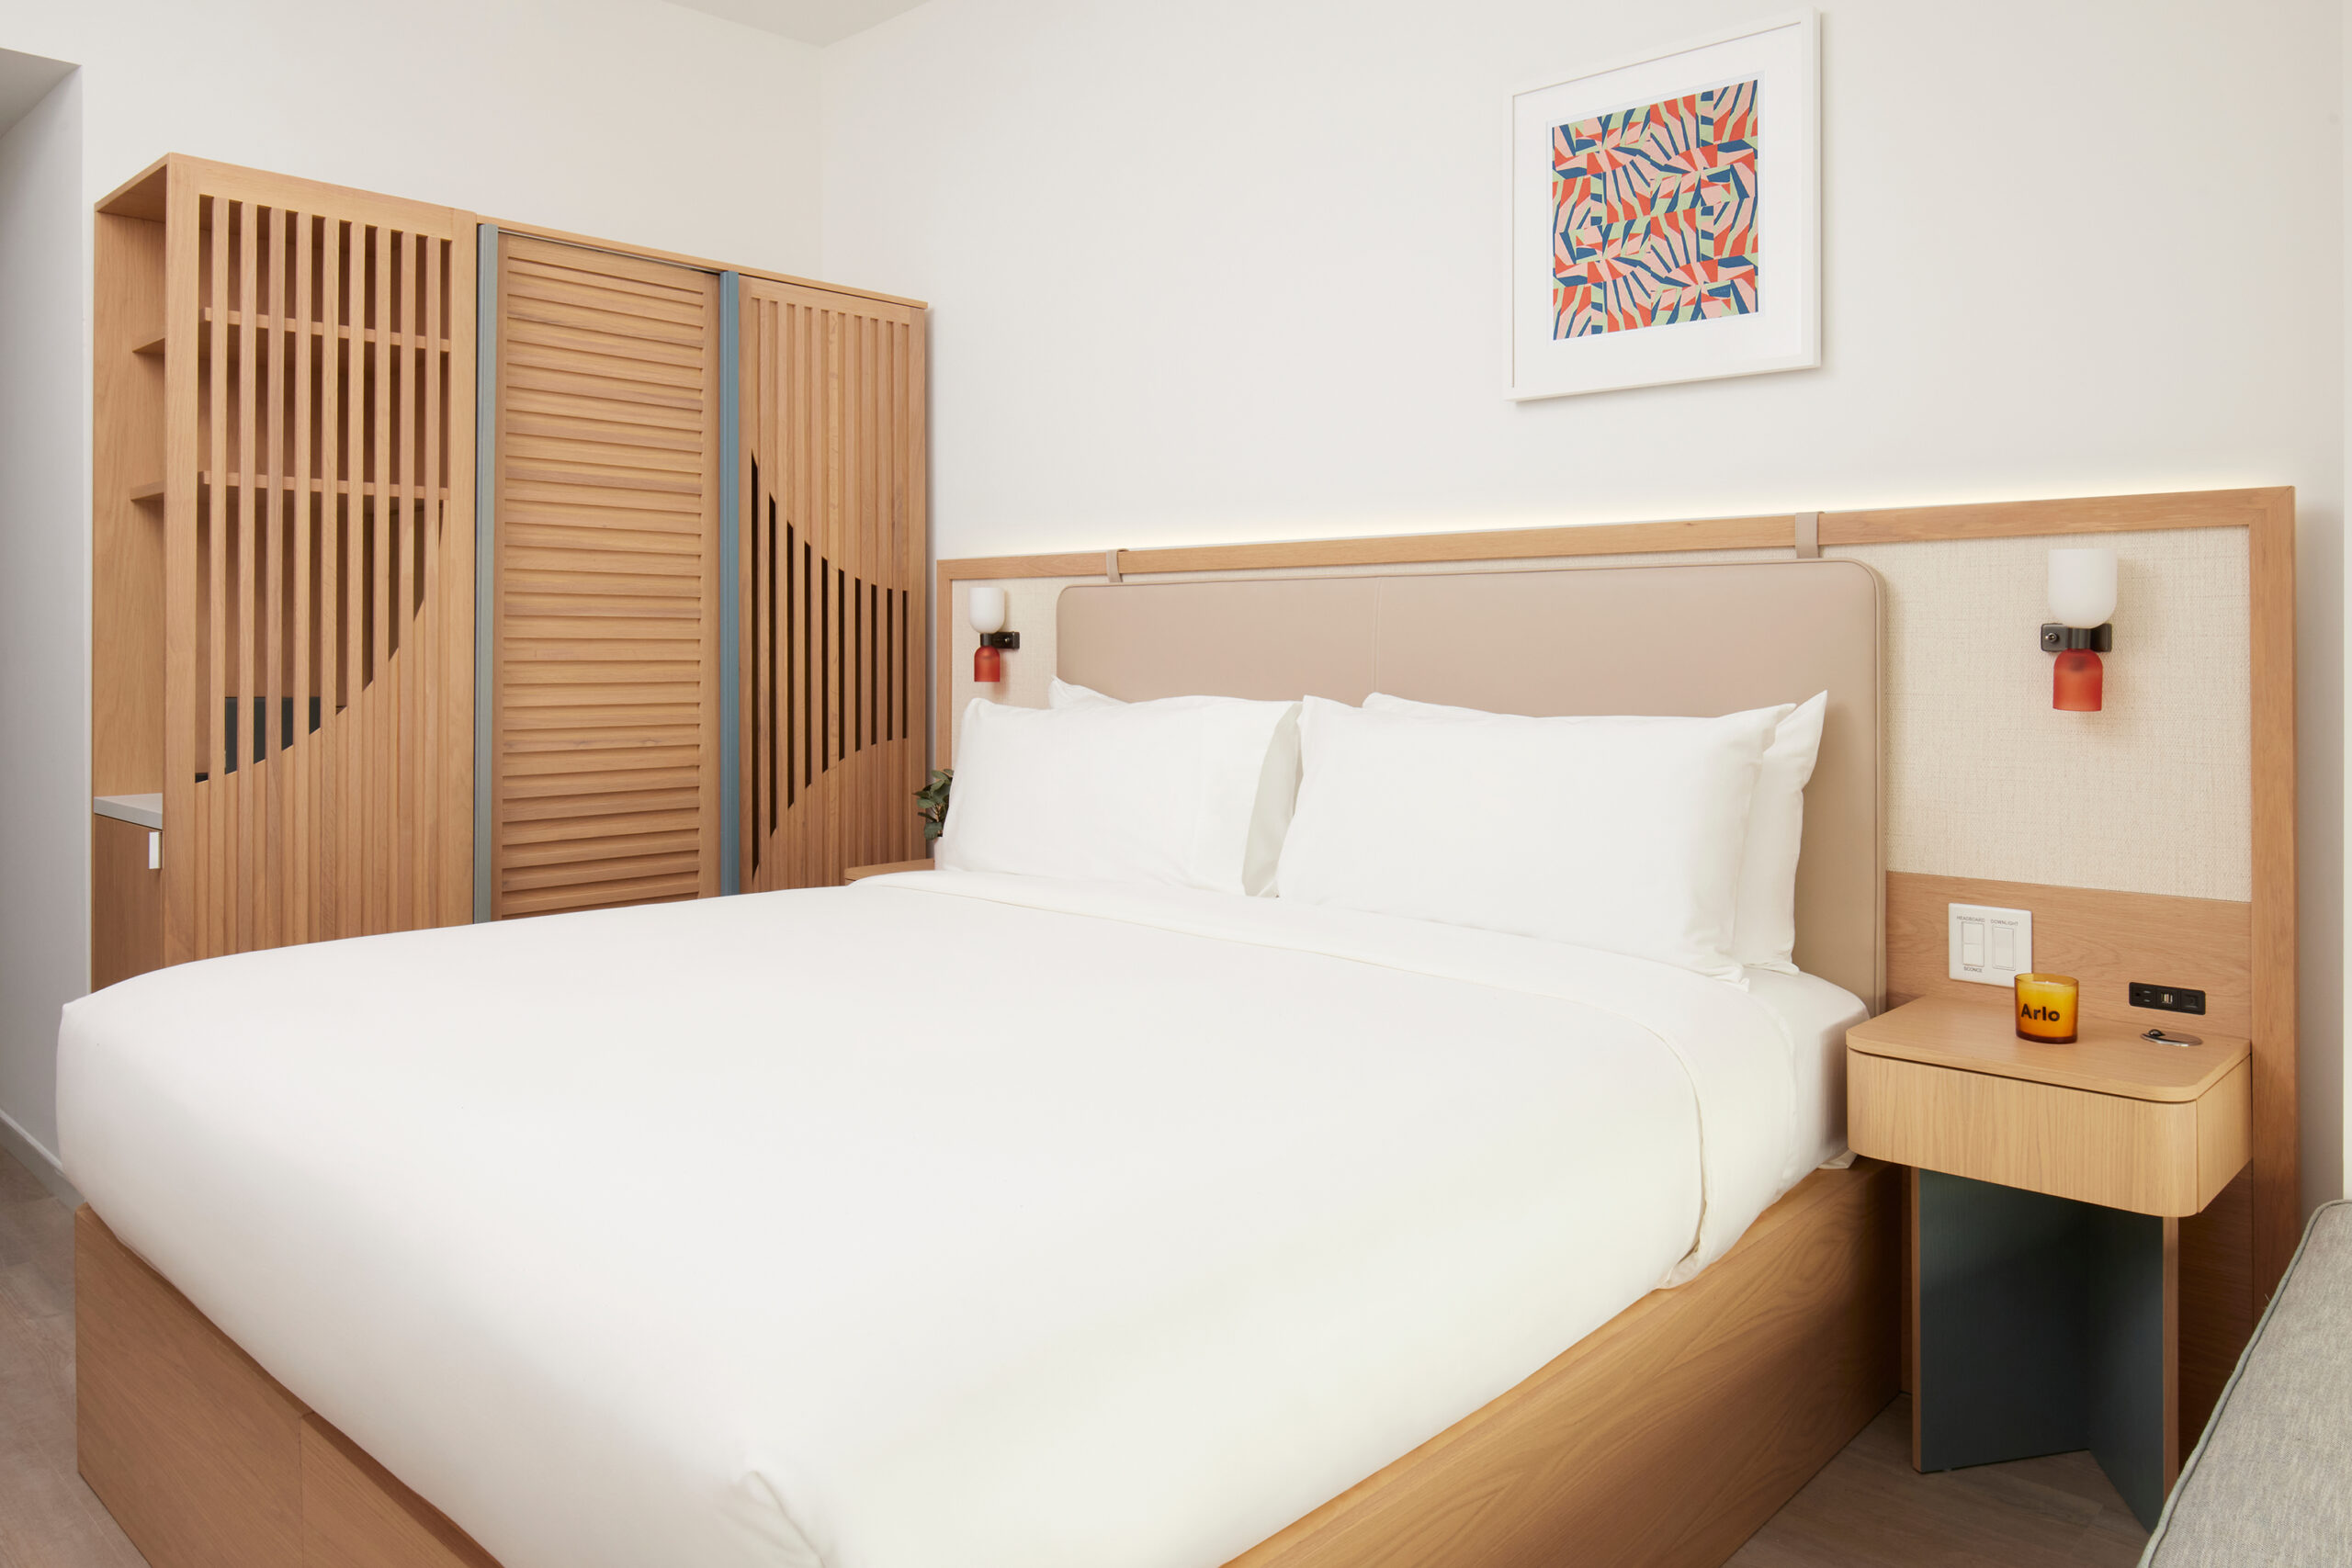 Arlo Wynwood King hotel room bed and closet